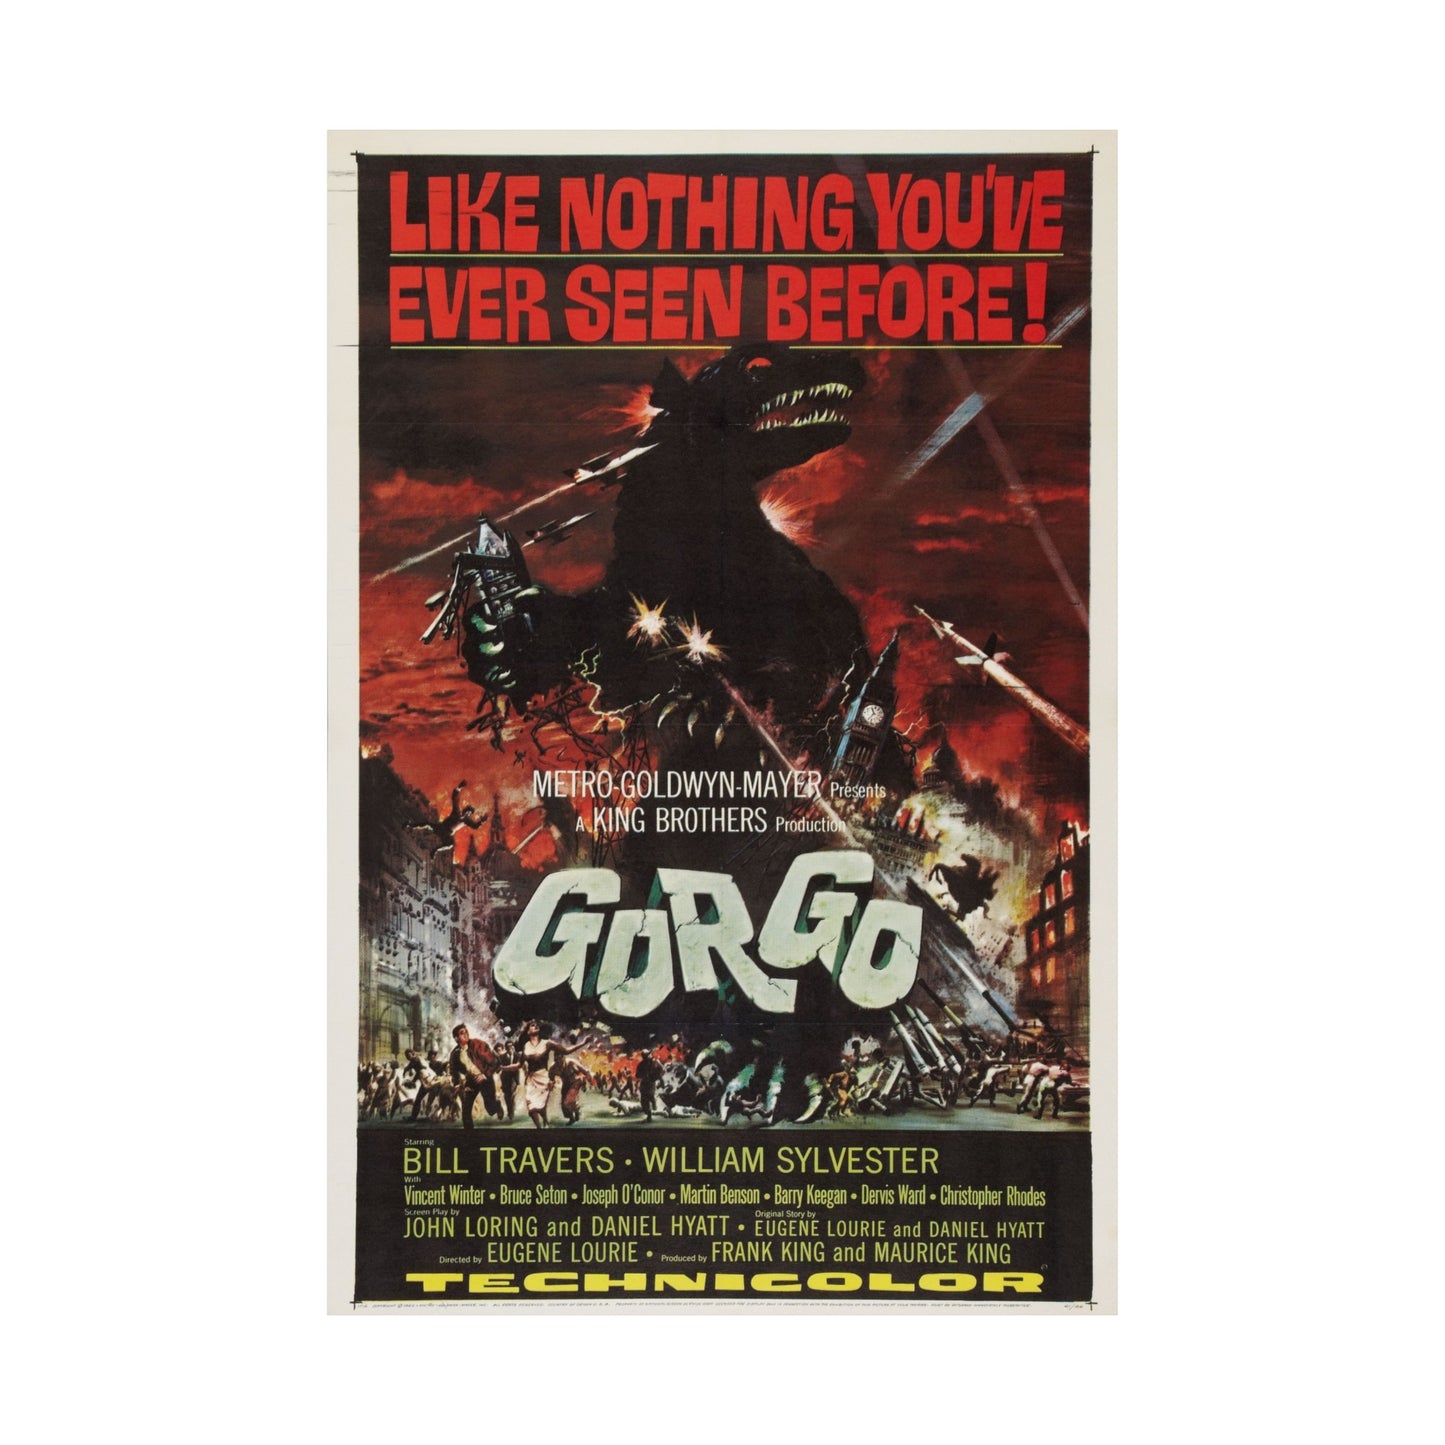 Gorgo Poster